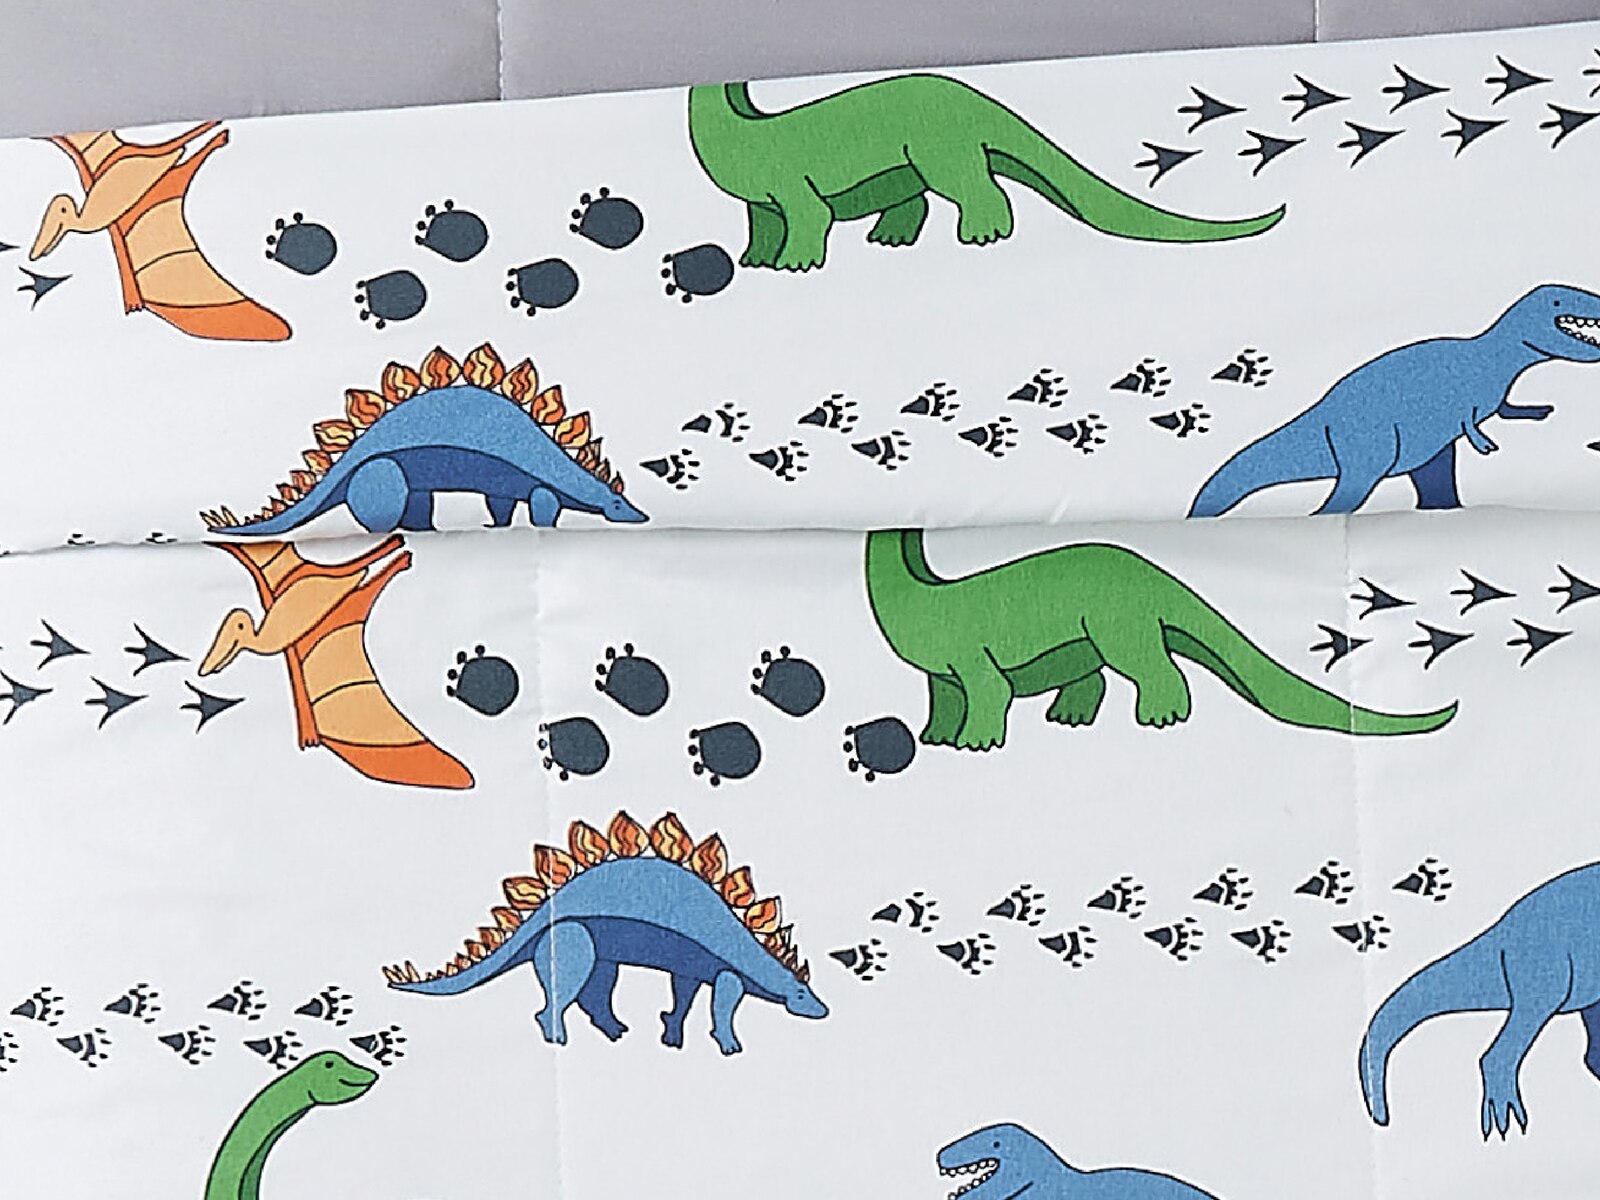 Dino Tracks Comforter Set